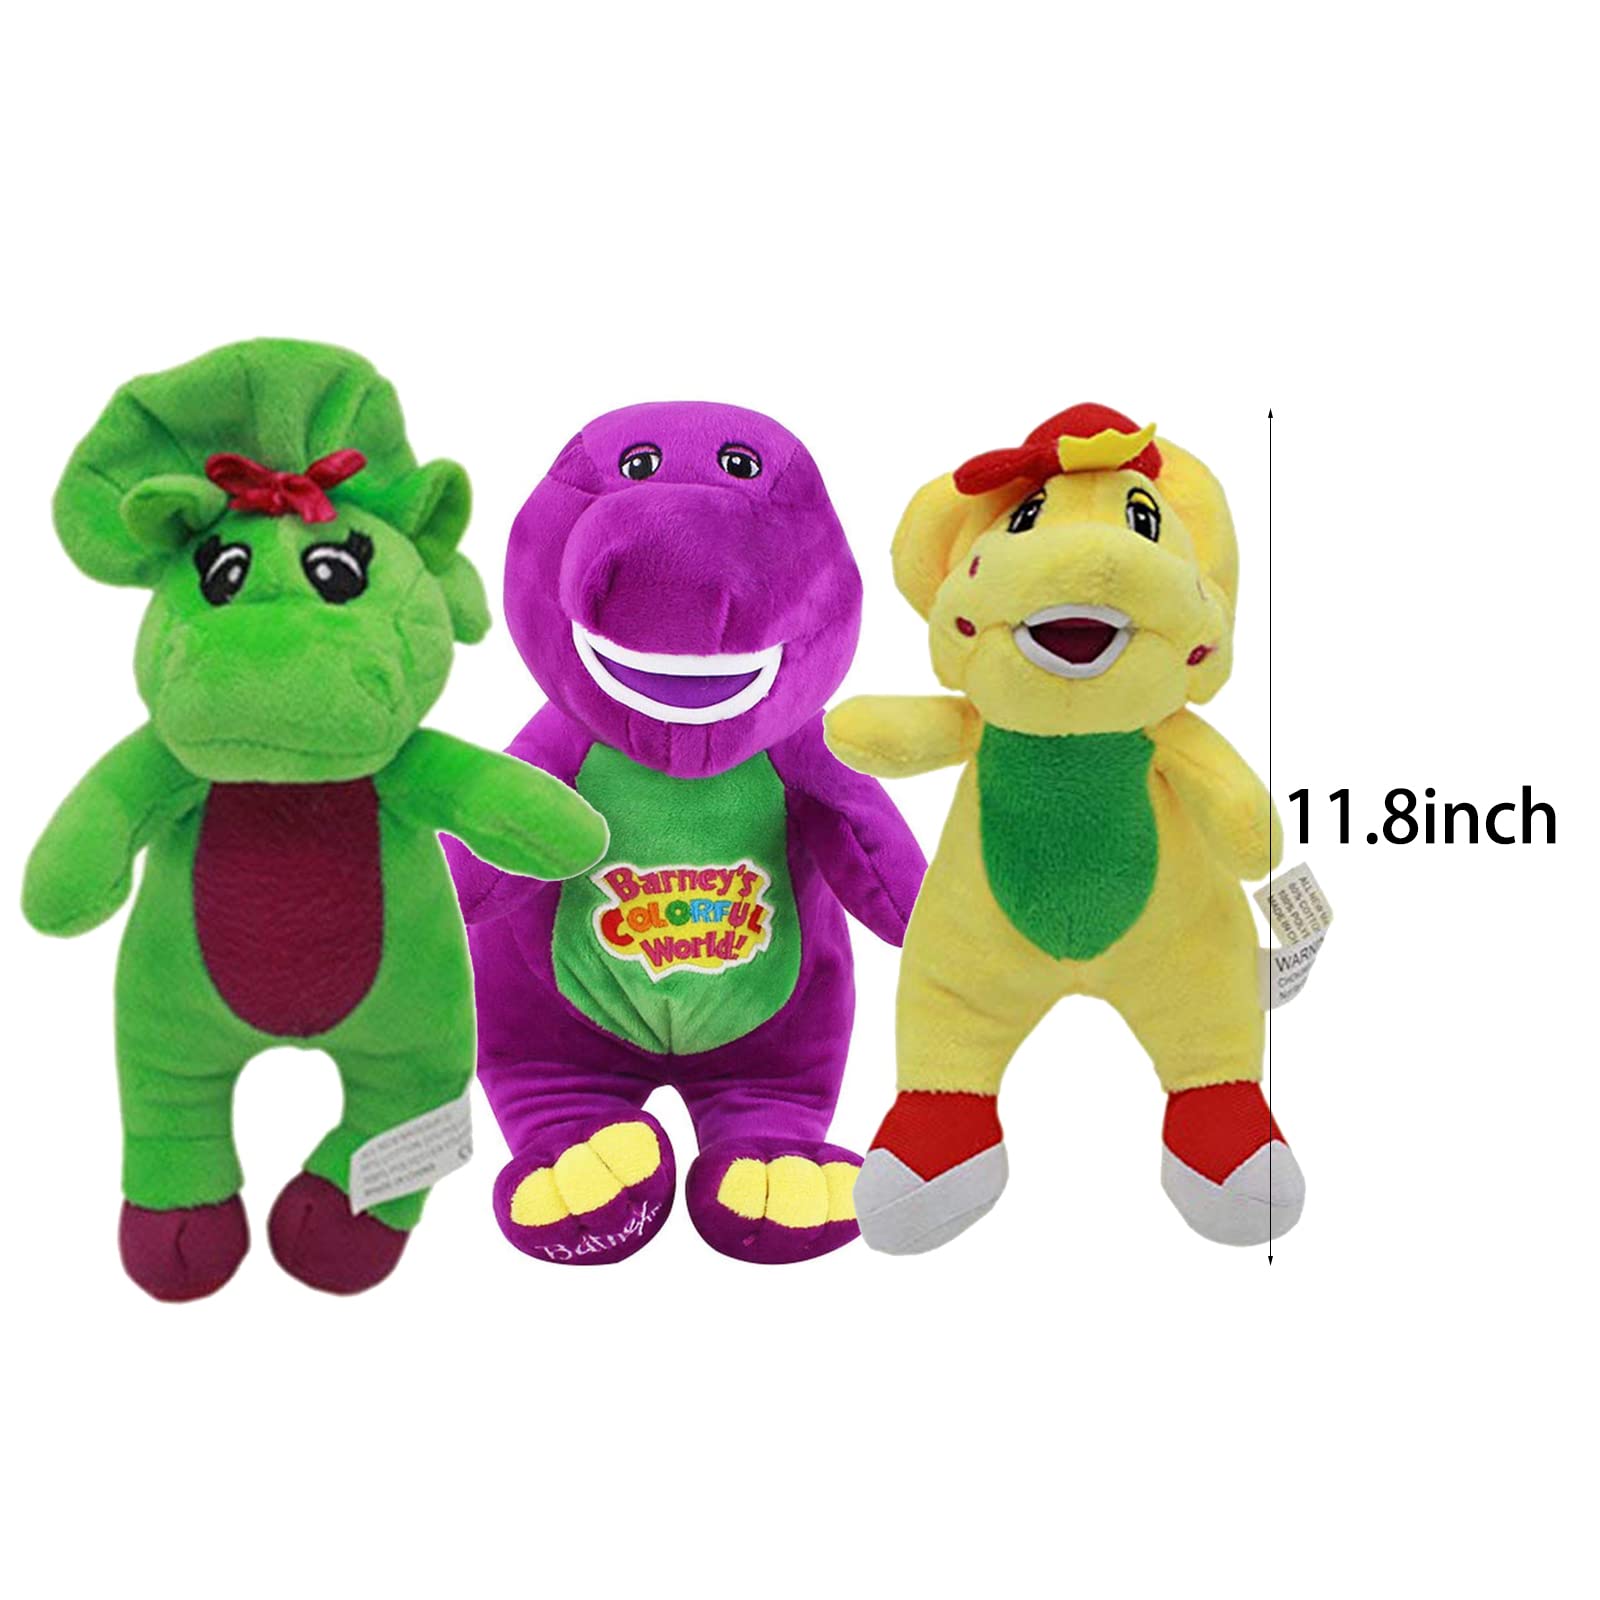 Dinosaur Plush Stuffed Animal Toy 11.8